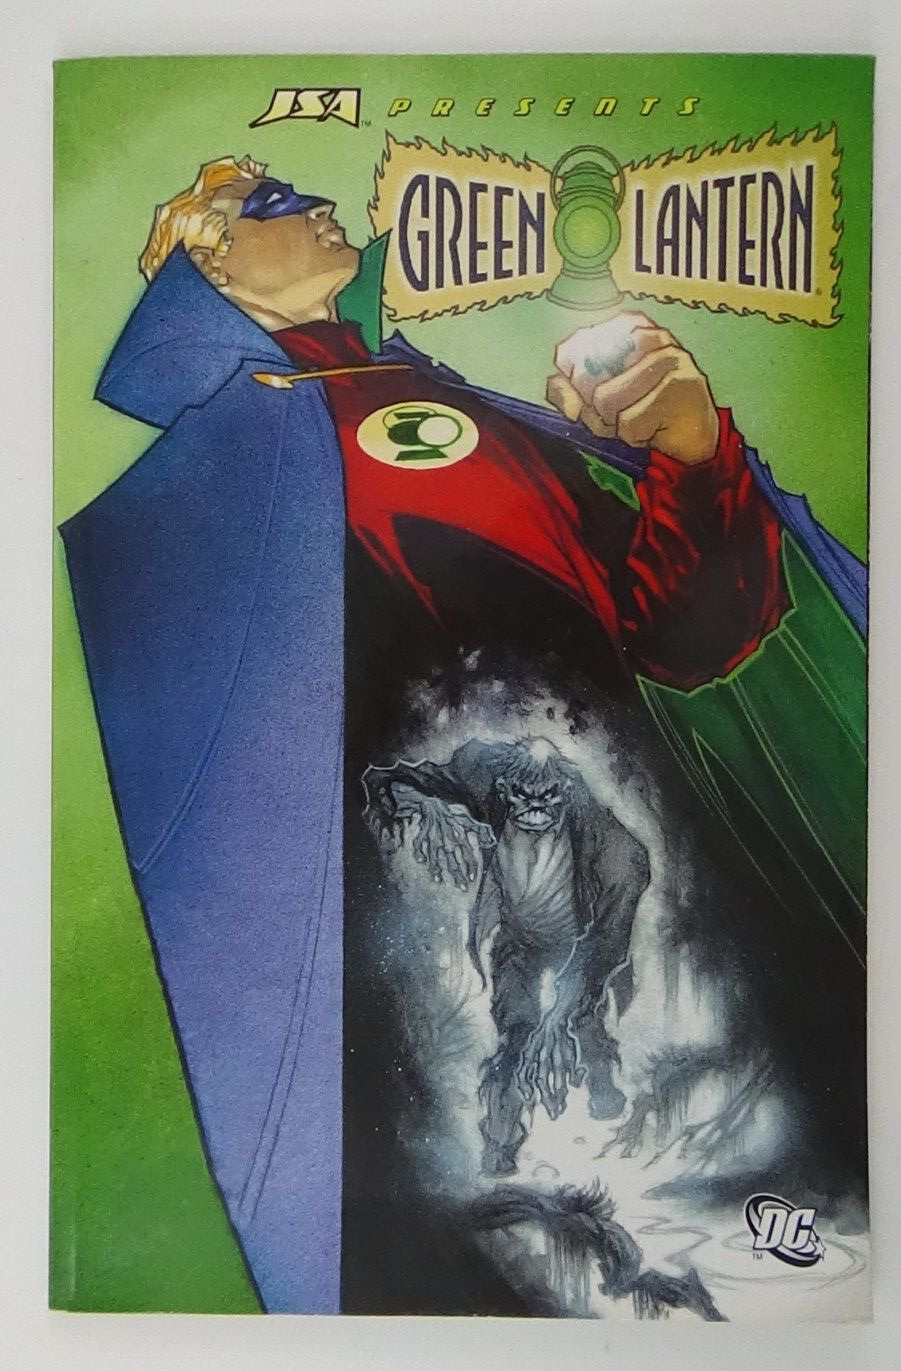 JSA Presents: Green Lantern (DC Comics, November 2008) Paperback #08